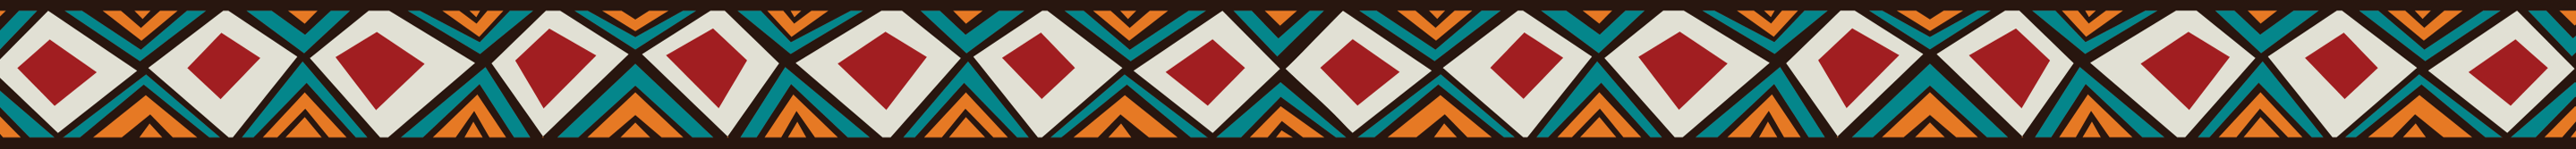 Illustration of African pattern